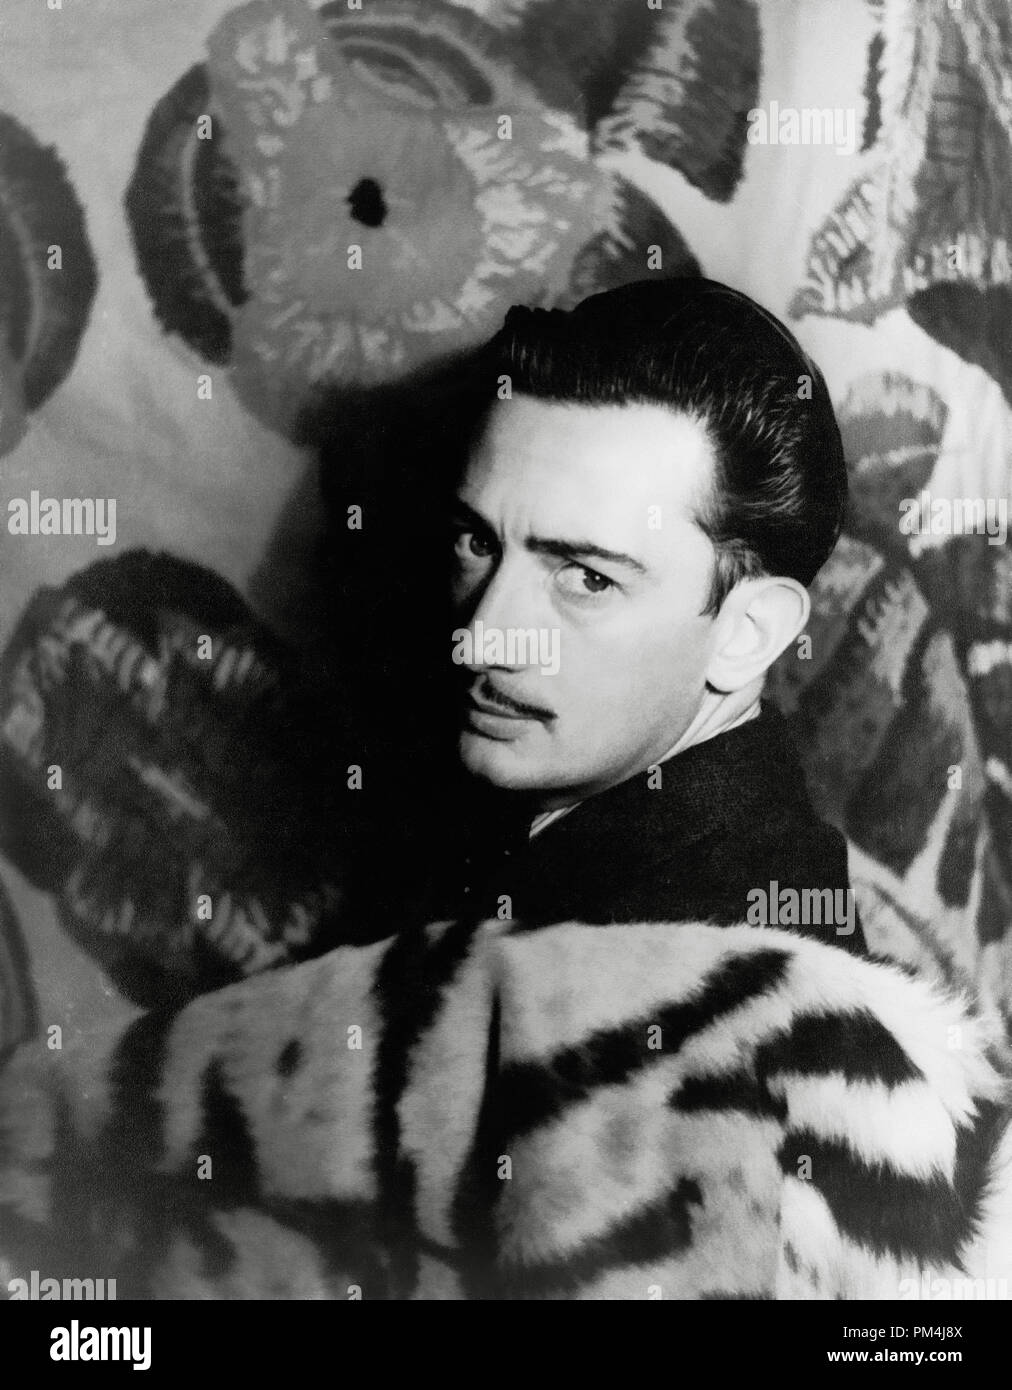 Salvador Dalí, Novembre 29, 1939 foto di Carl Van Vechten Riferimento File # 1003 609THA Foto Stock